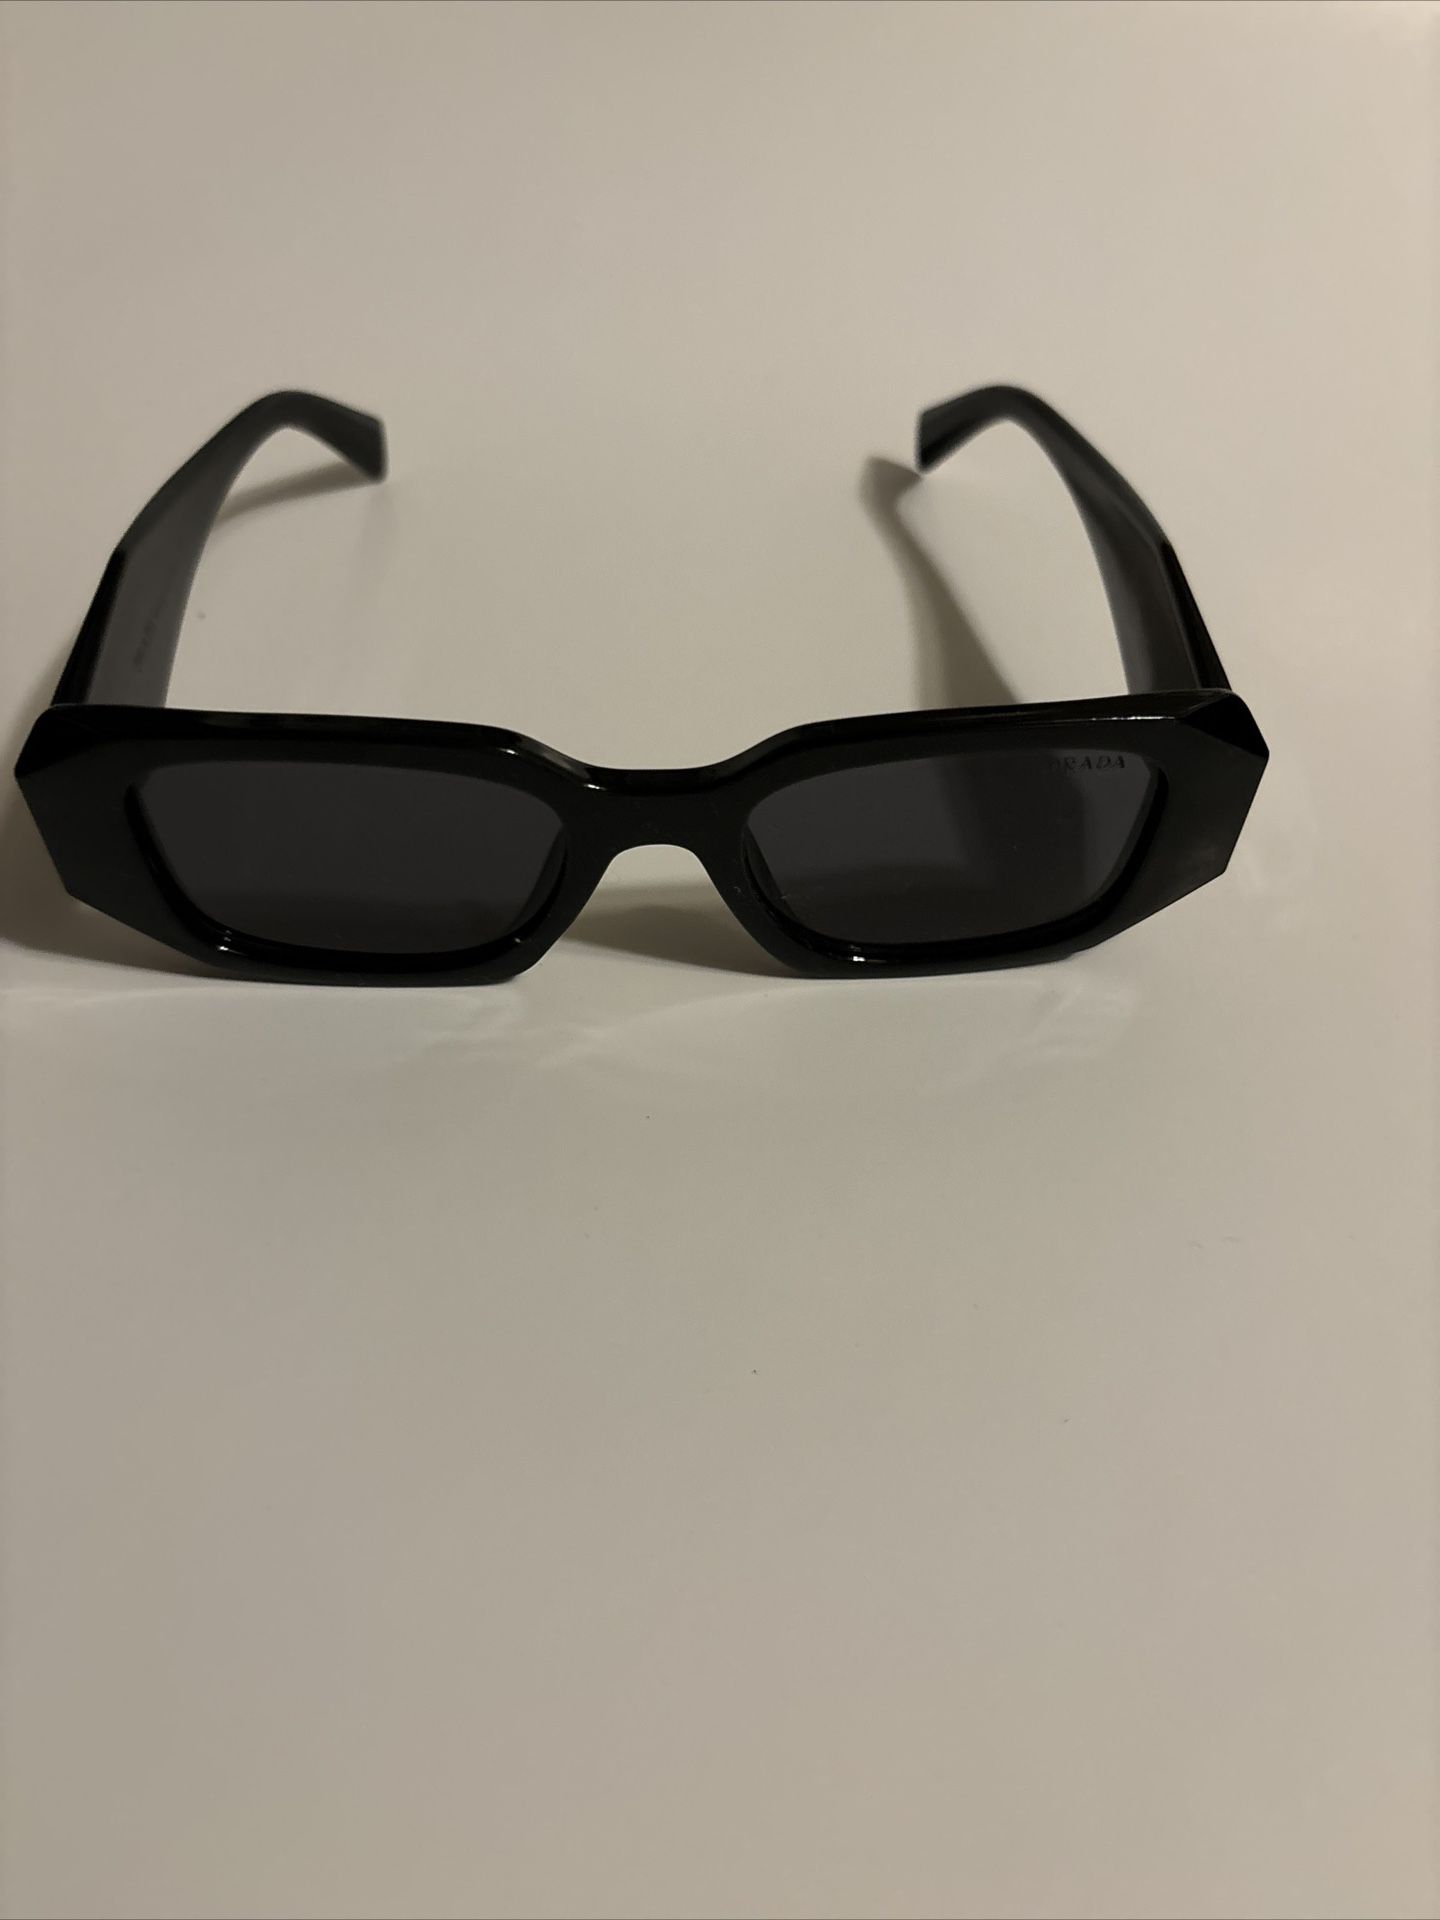 Prada black sunglasses for men